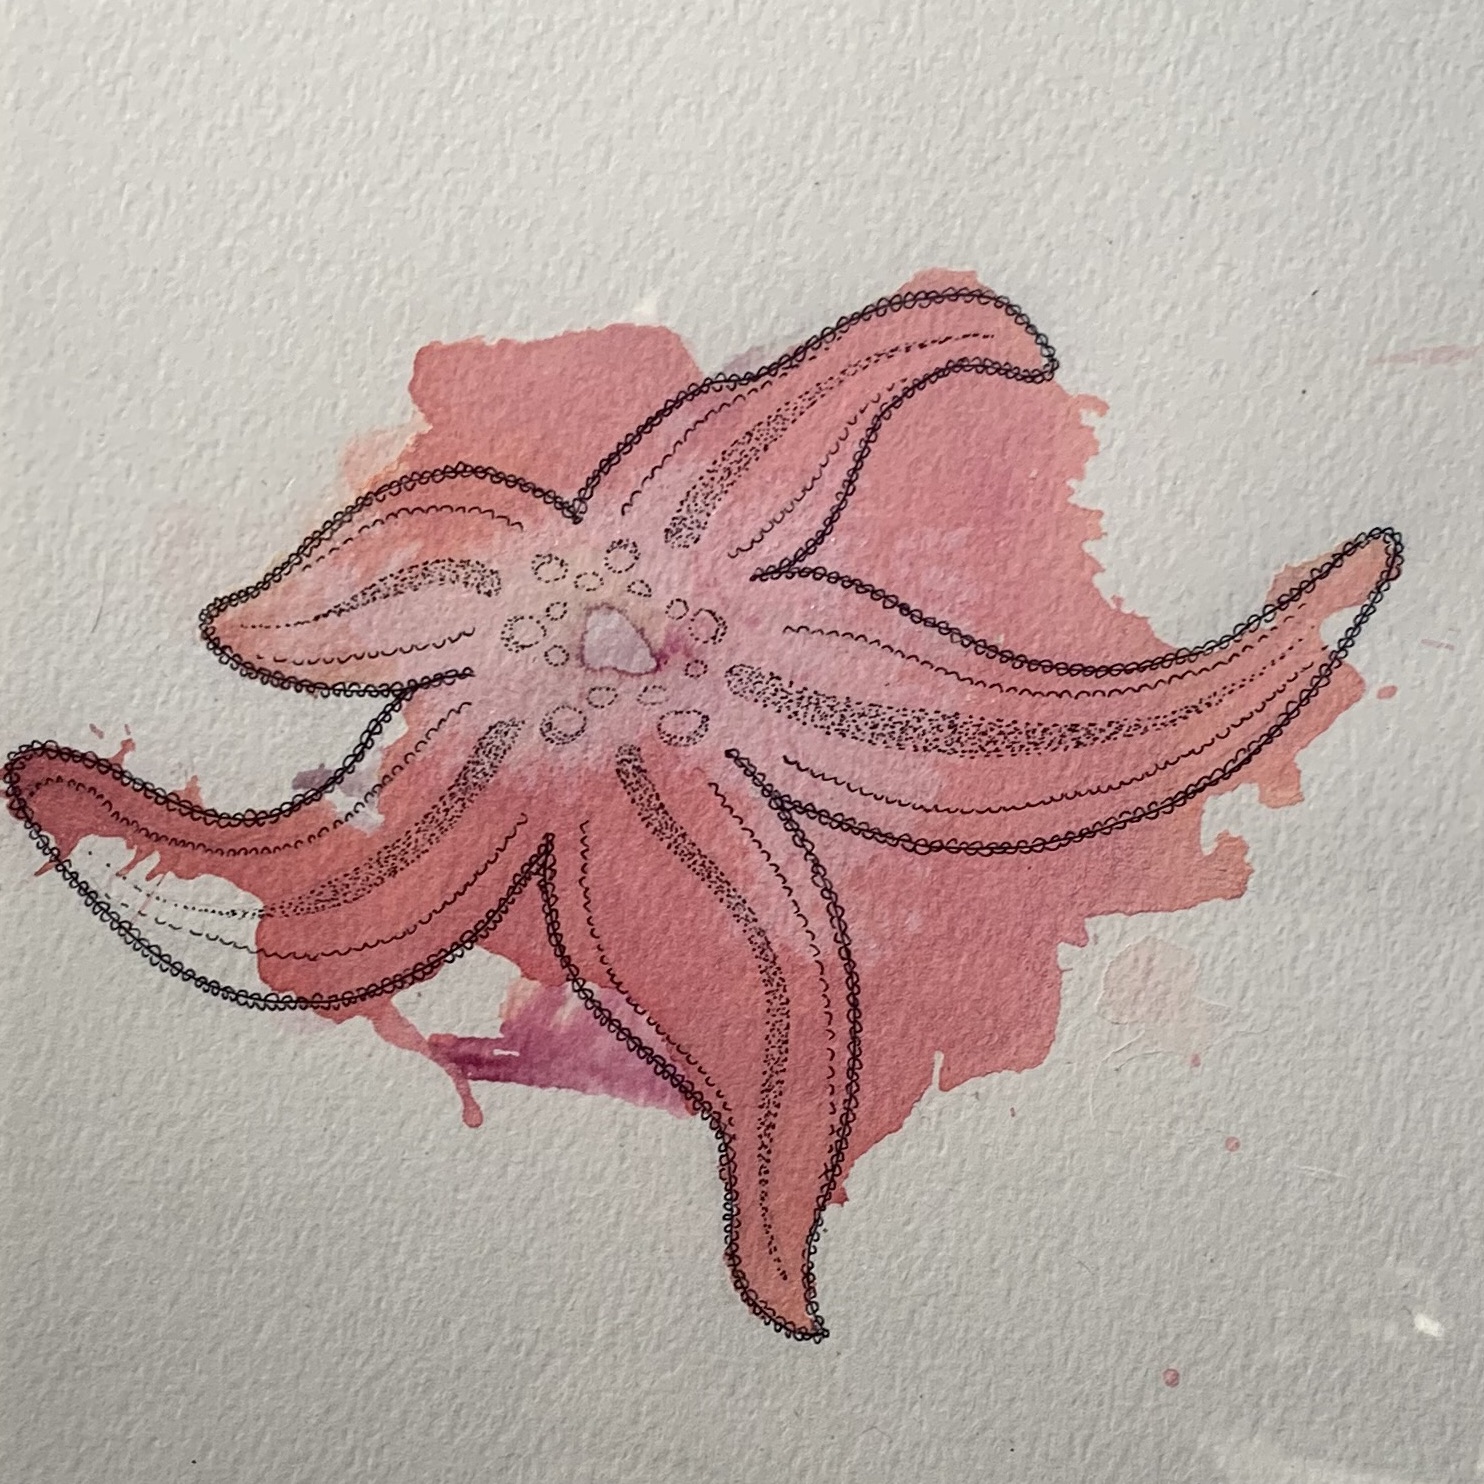 002, image description: pink starfish